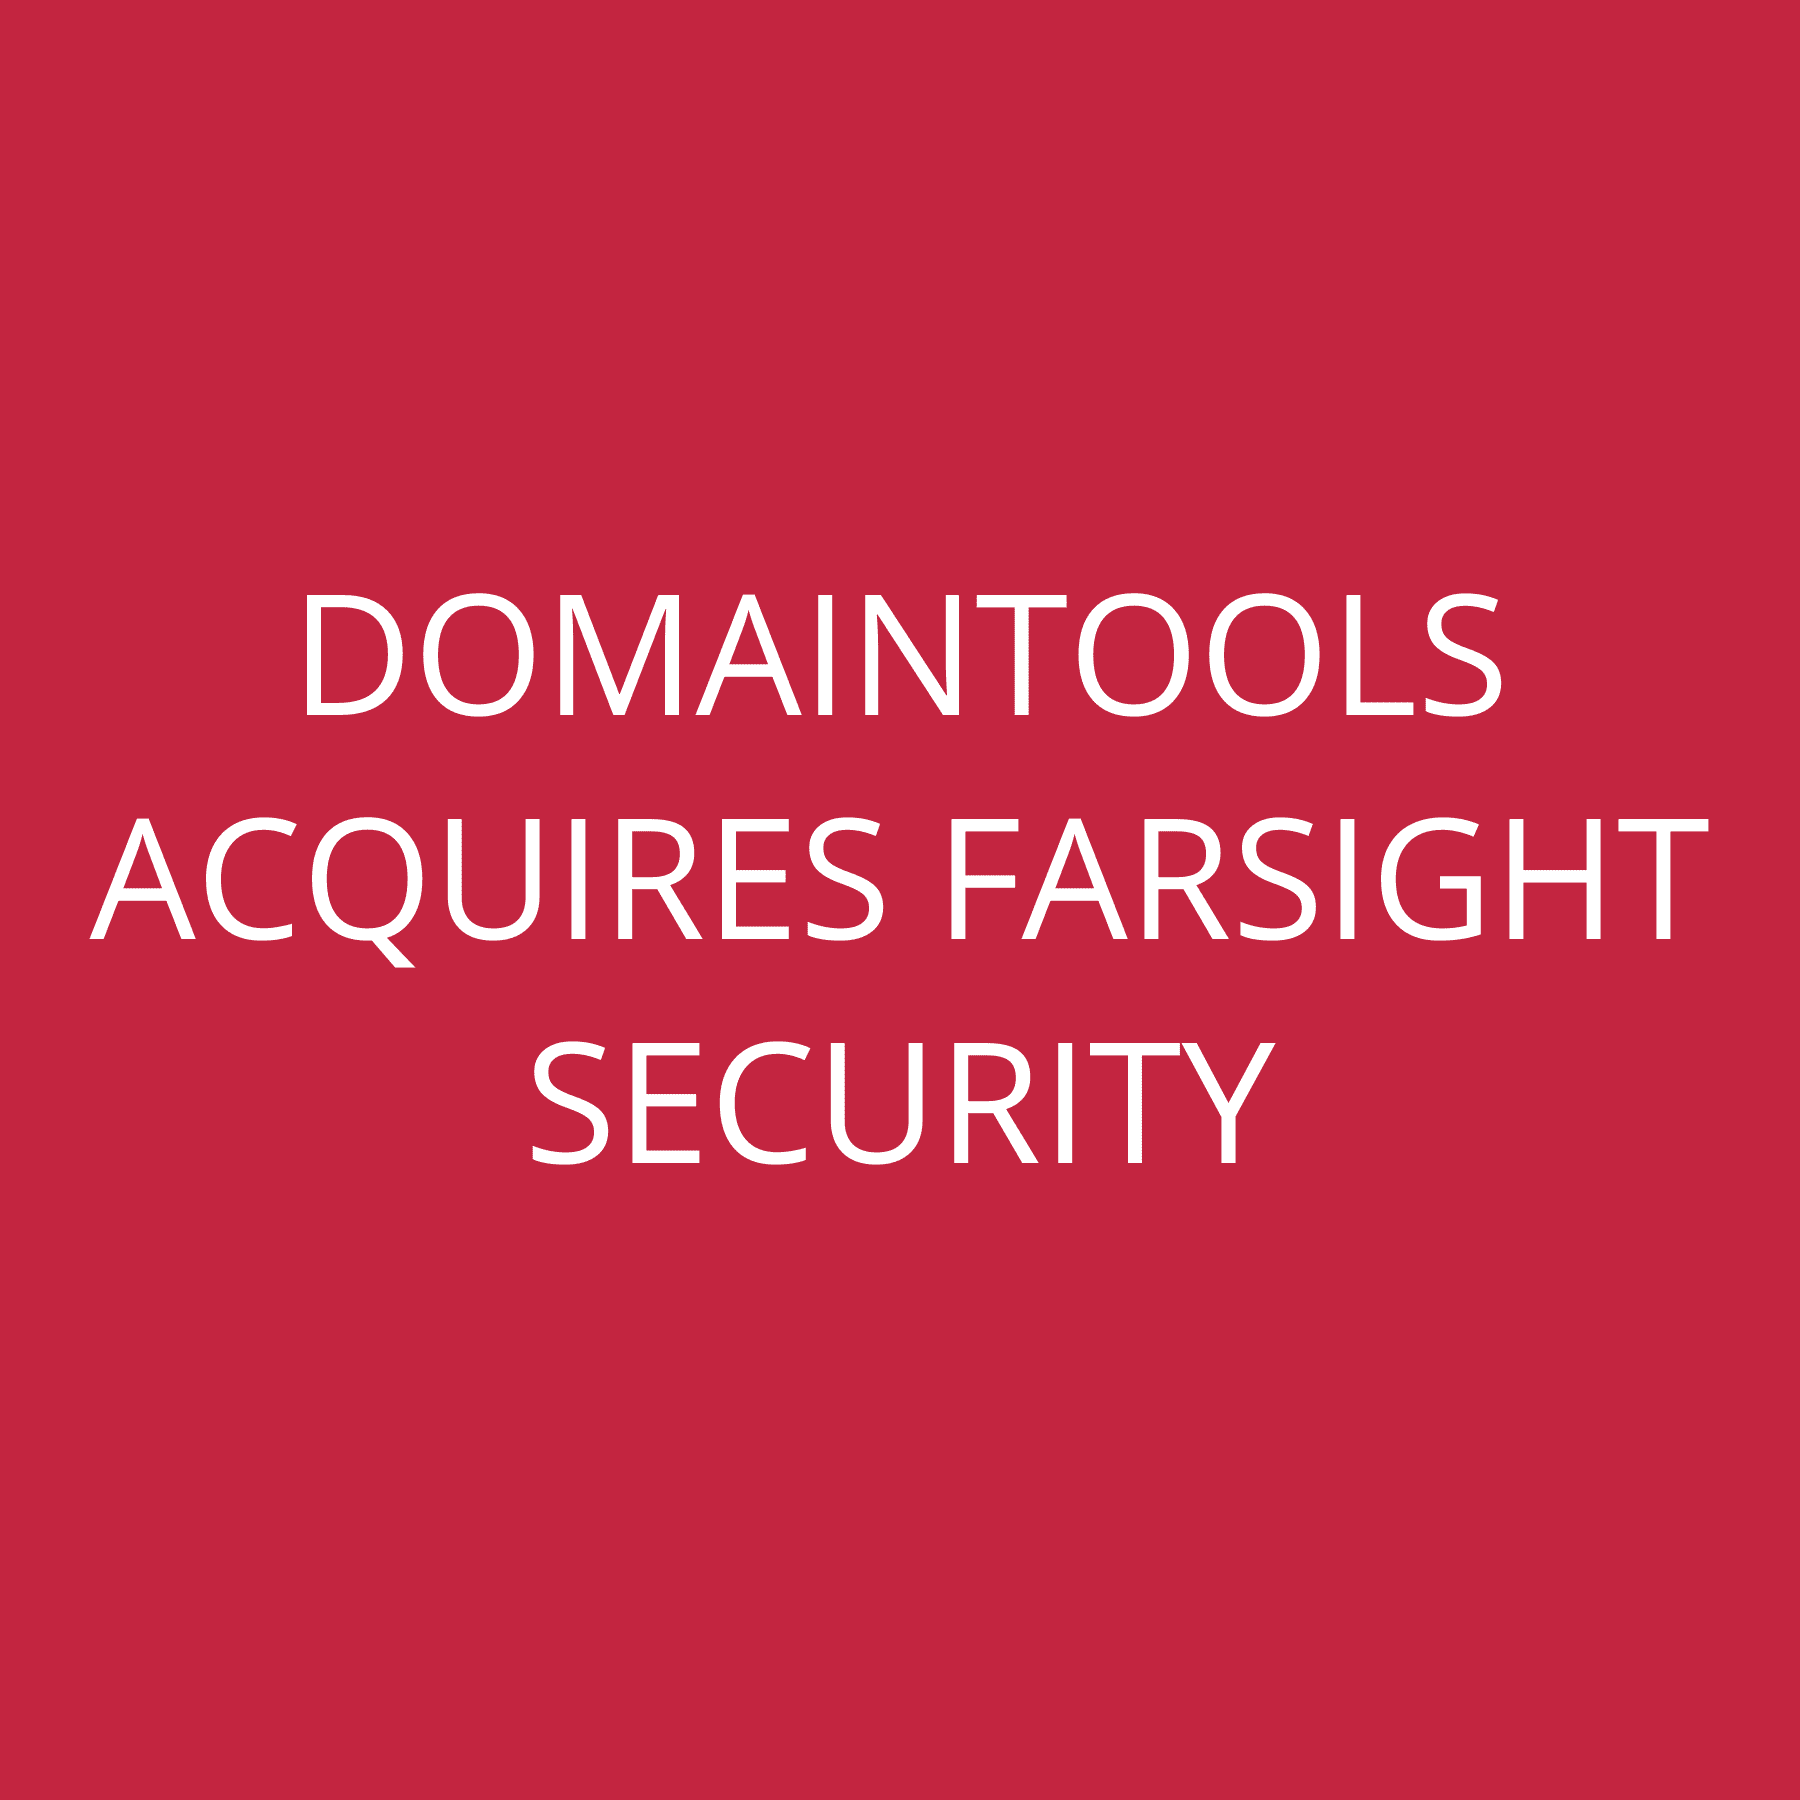 DomainTools acquires Farsight Security